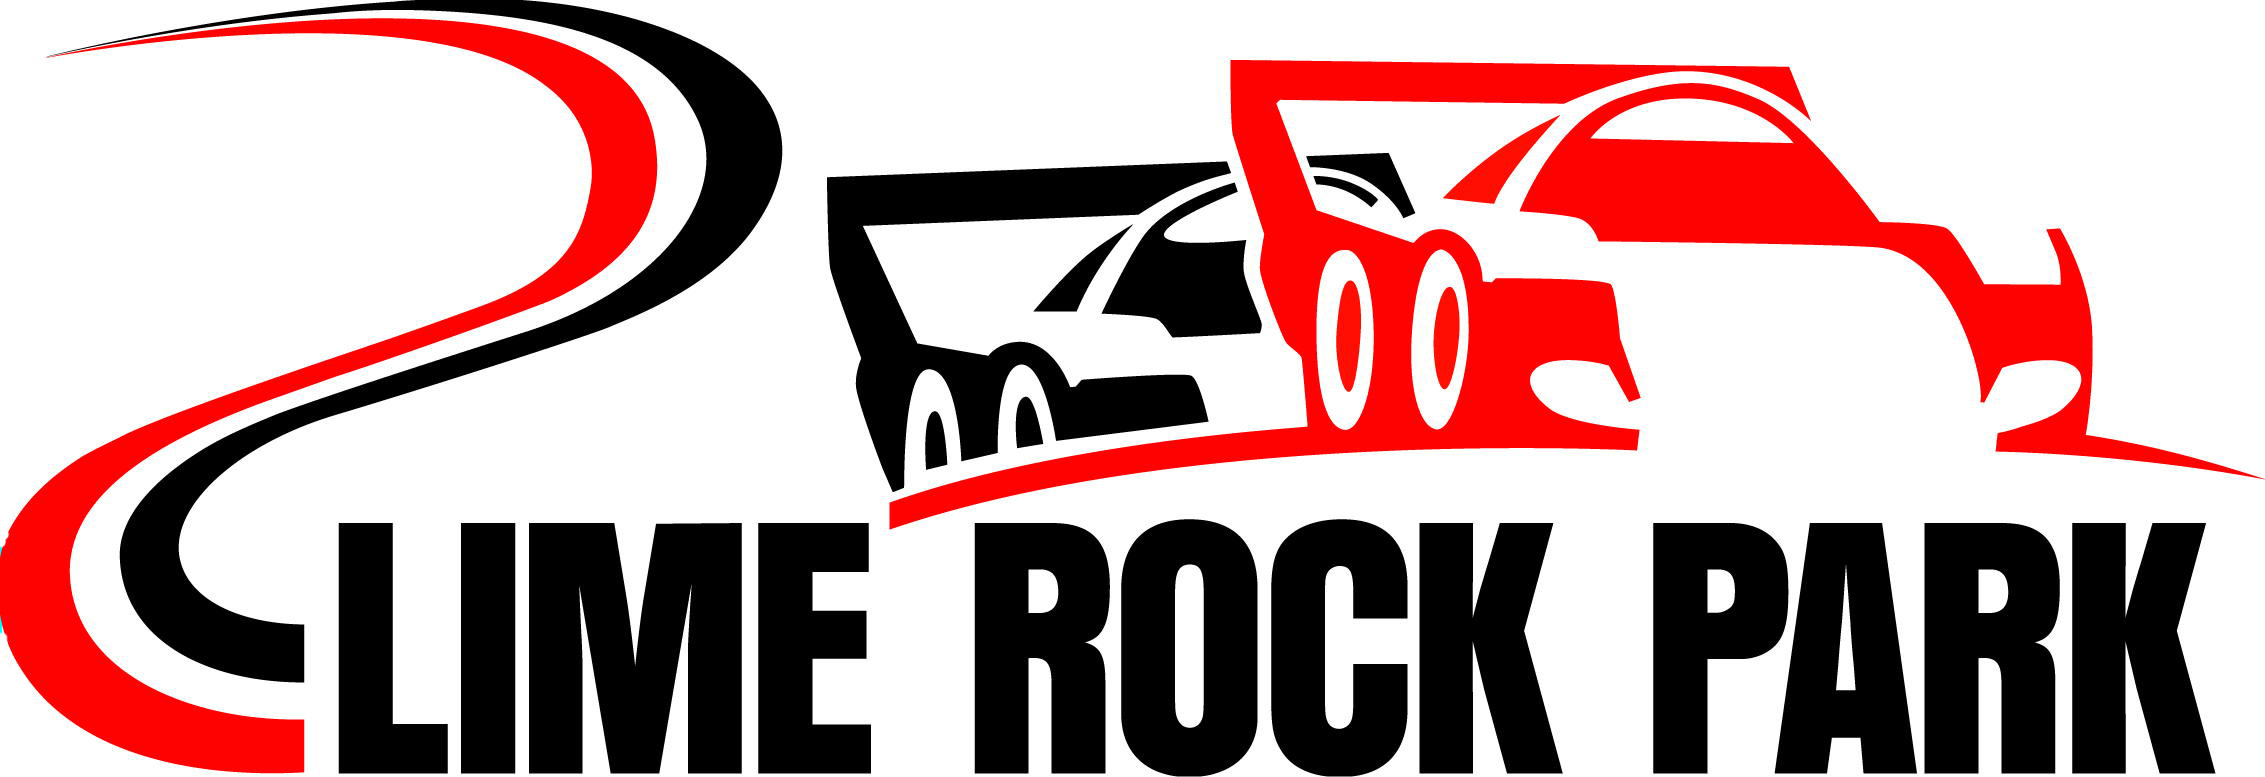 Lime rock park logo